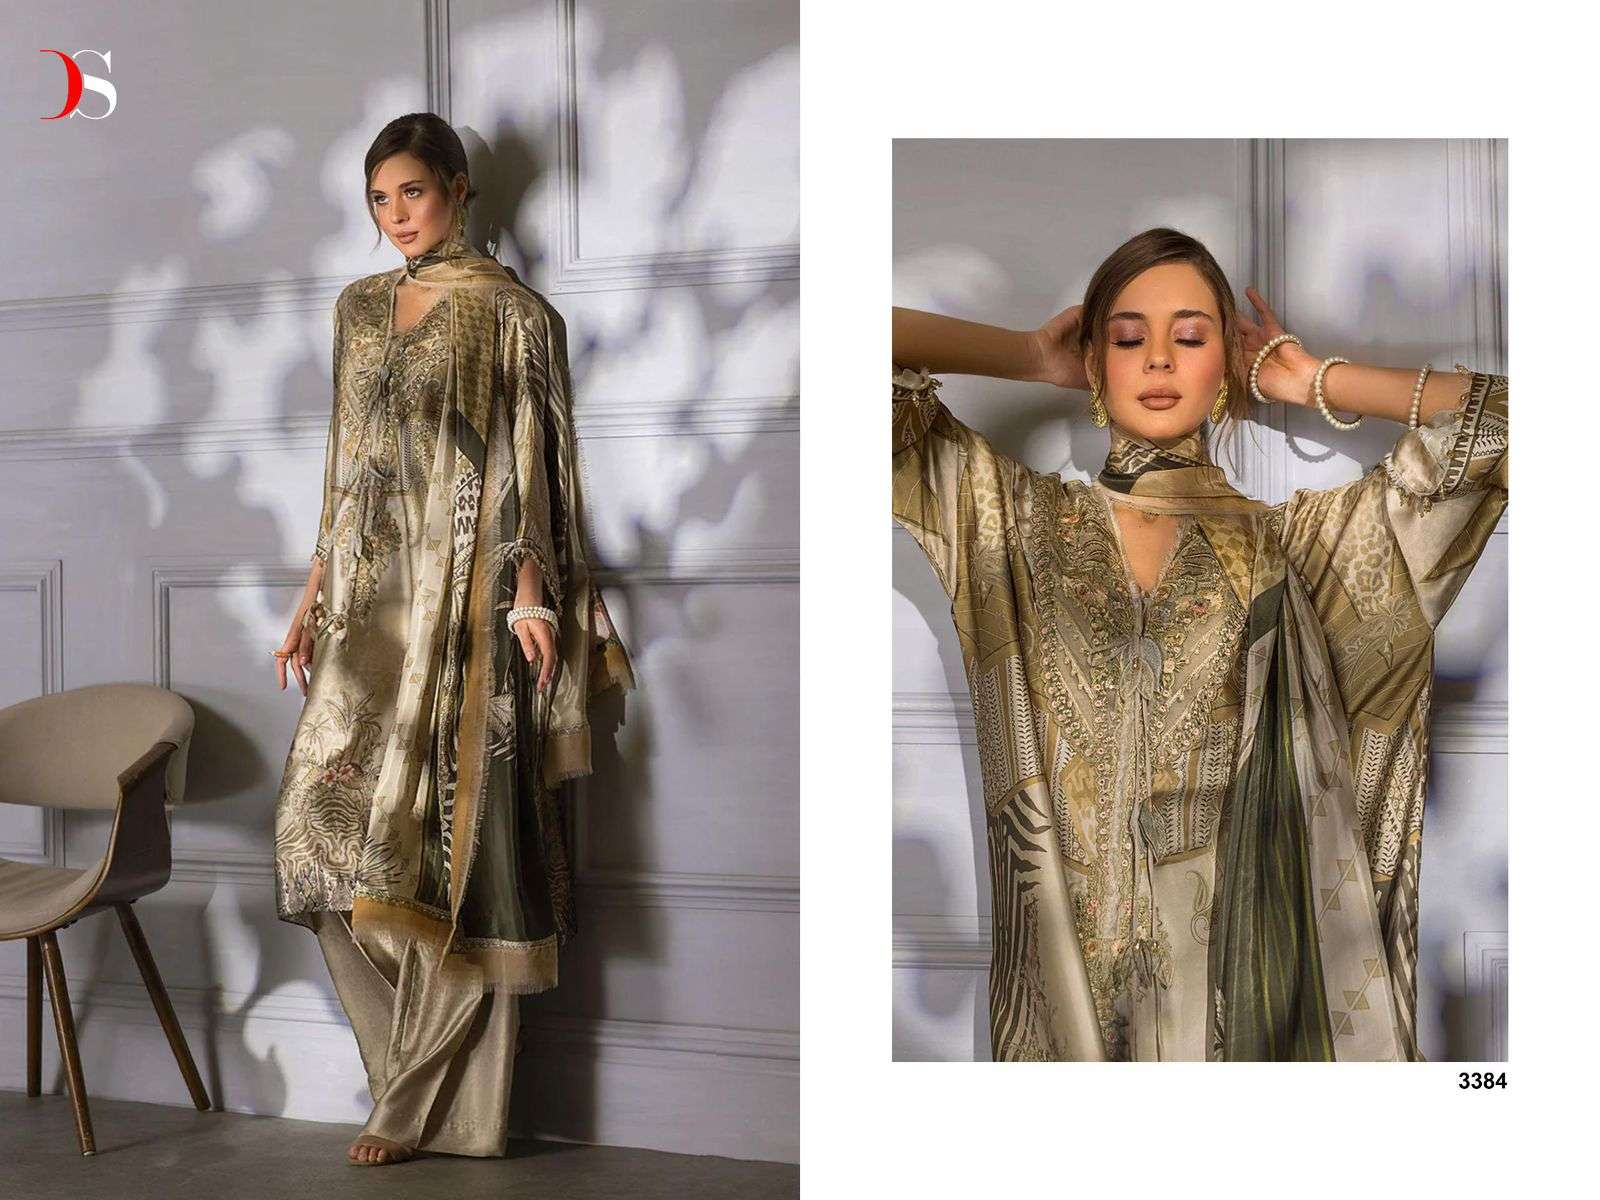 deepsy suits sobia nazir silk vol-24 3381-3385 series latest designer partywear salwar kameez wholesaler india surat gujarat